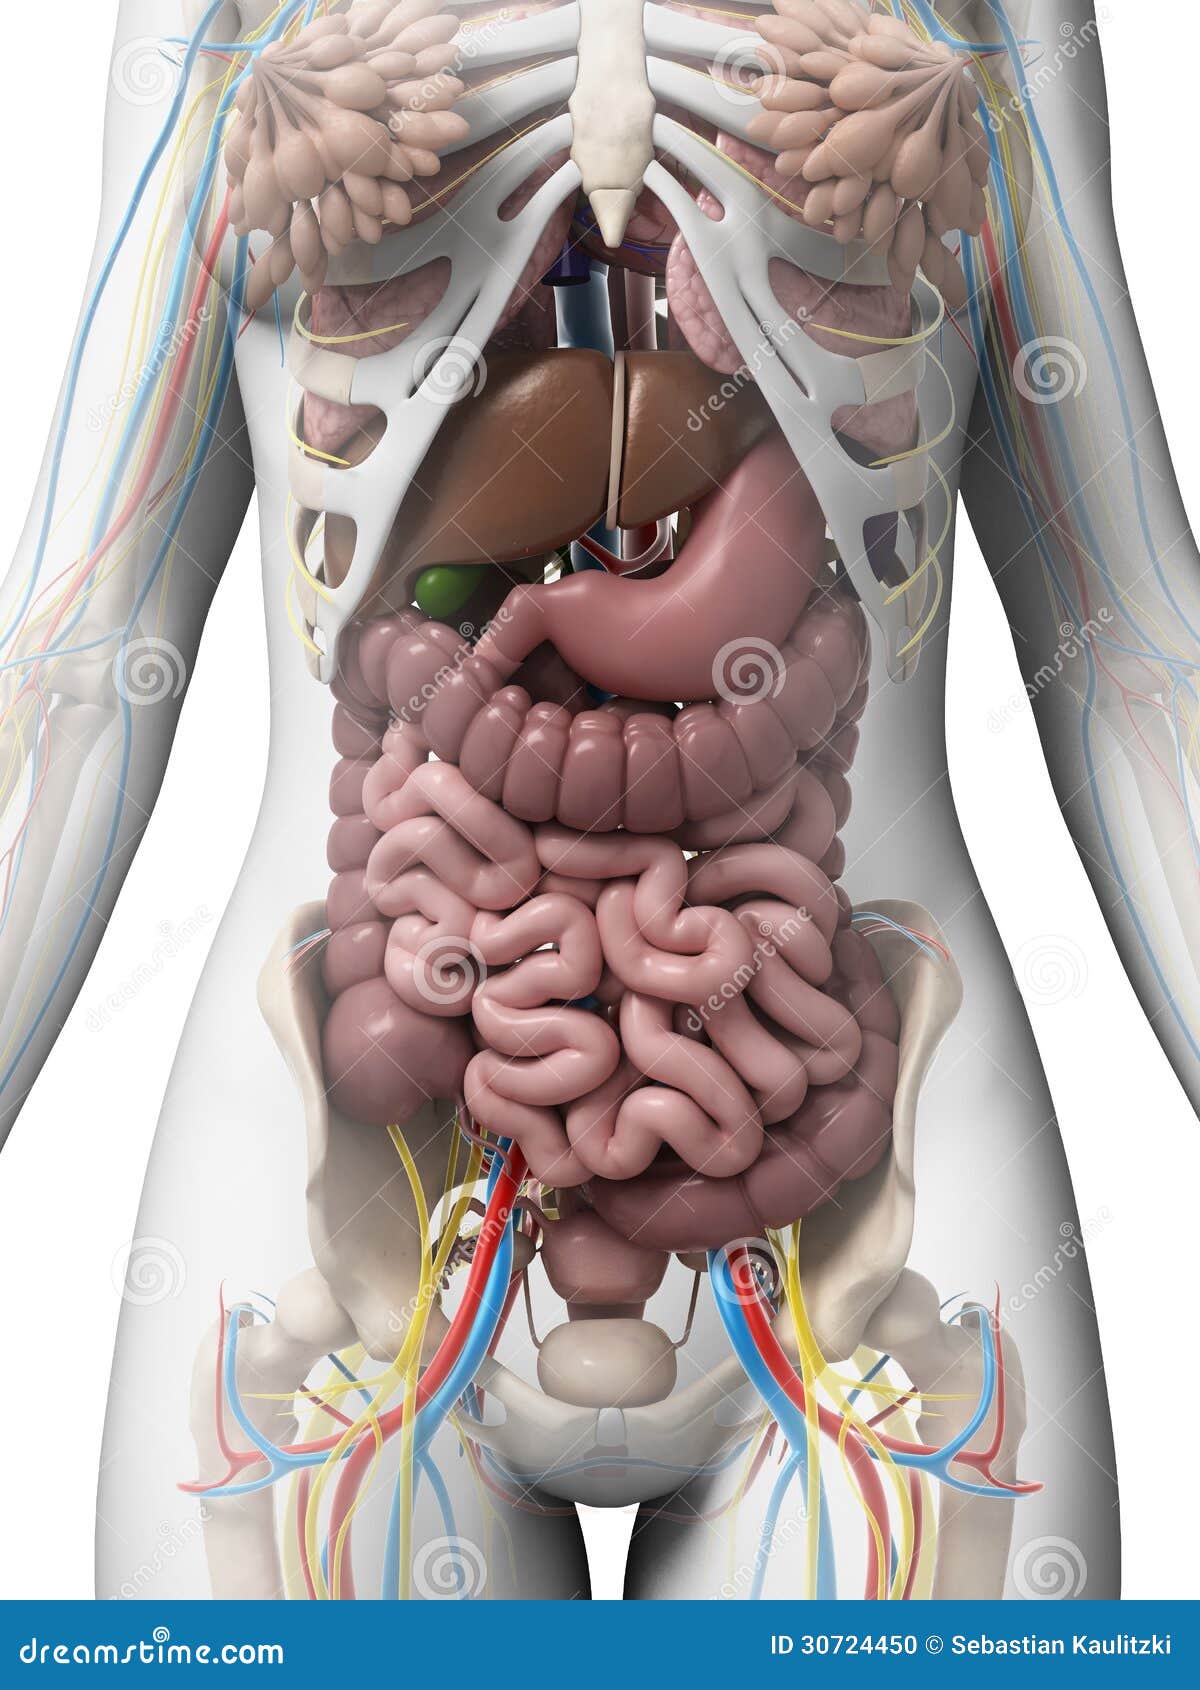 Female anatomy stock illustration. Image of hepatic, medicine - 30724450